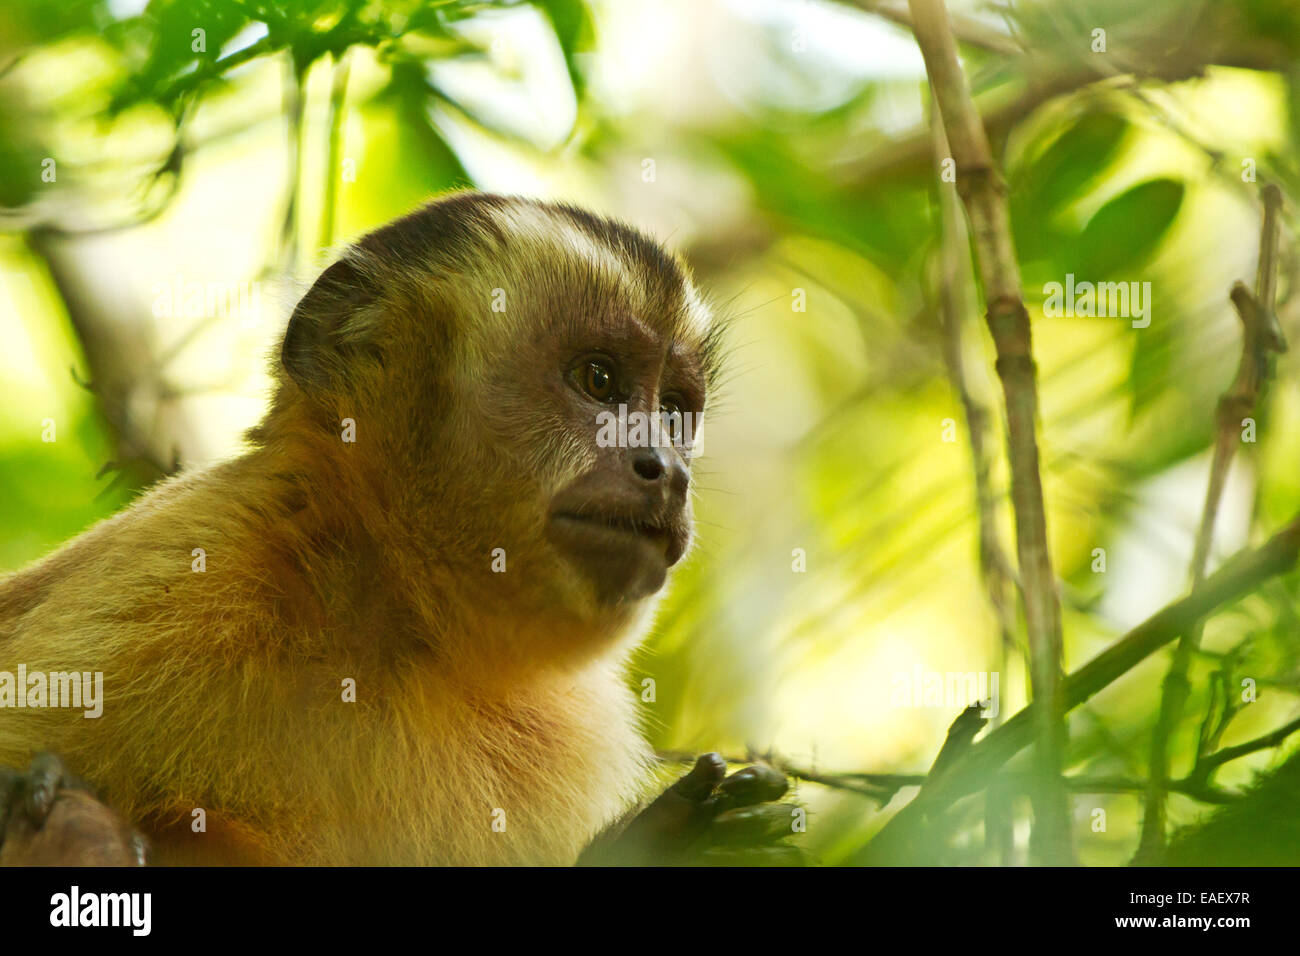 Head of a Capuchin monkey in the Pantanal wetlands in Brazil Stock Photo